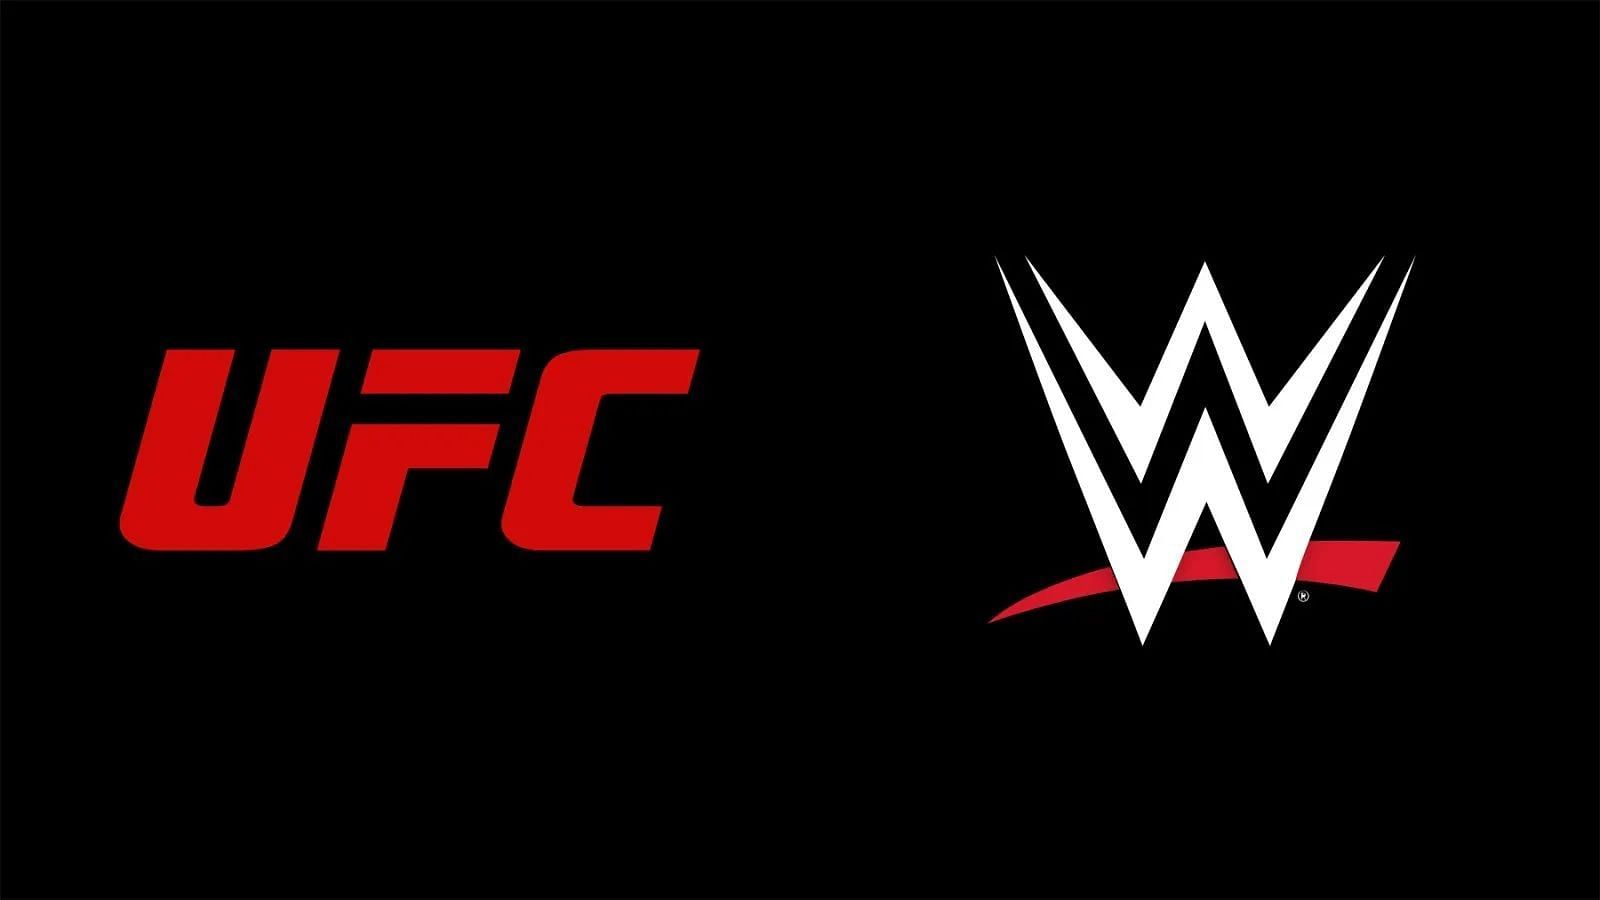 UFC and WWE